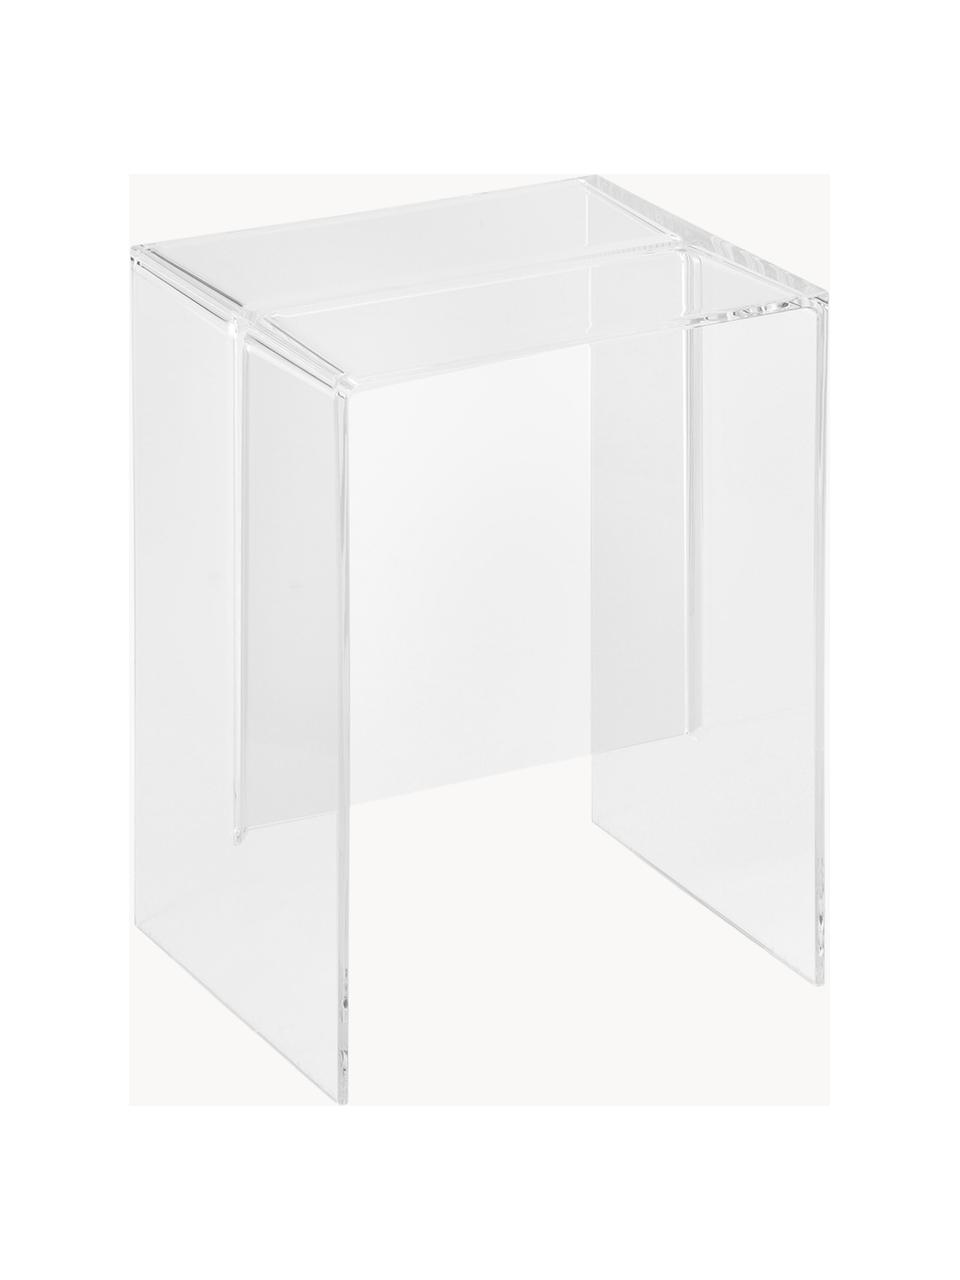 Table d'appoint design Max-Beam, Plastique, Transparent, larg. 33 x haut. 47 cm